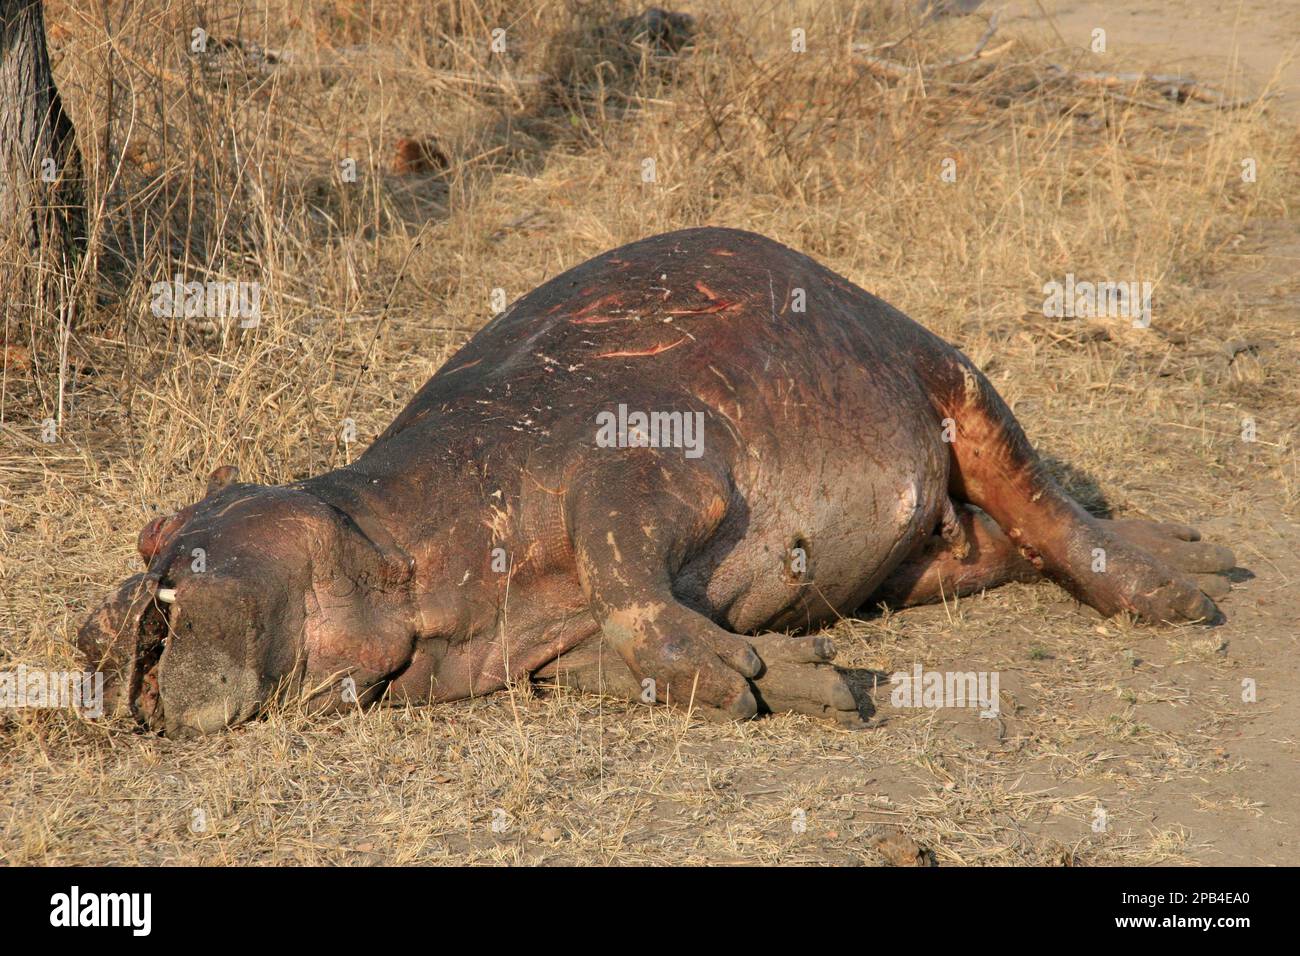 https://c8.alamy.com/comp/2PB4EA0/hippopotamus-hippopotamus-hippopotamus-ungulates-even-toed-ungulates-mammals-animals-dead-hippopotamus-head-covered-with-flies-sabi-sands-sou-2PB4EA0.jpg